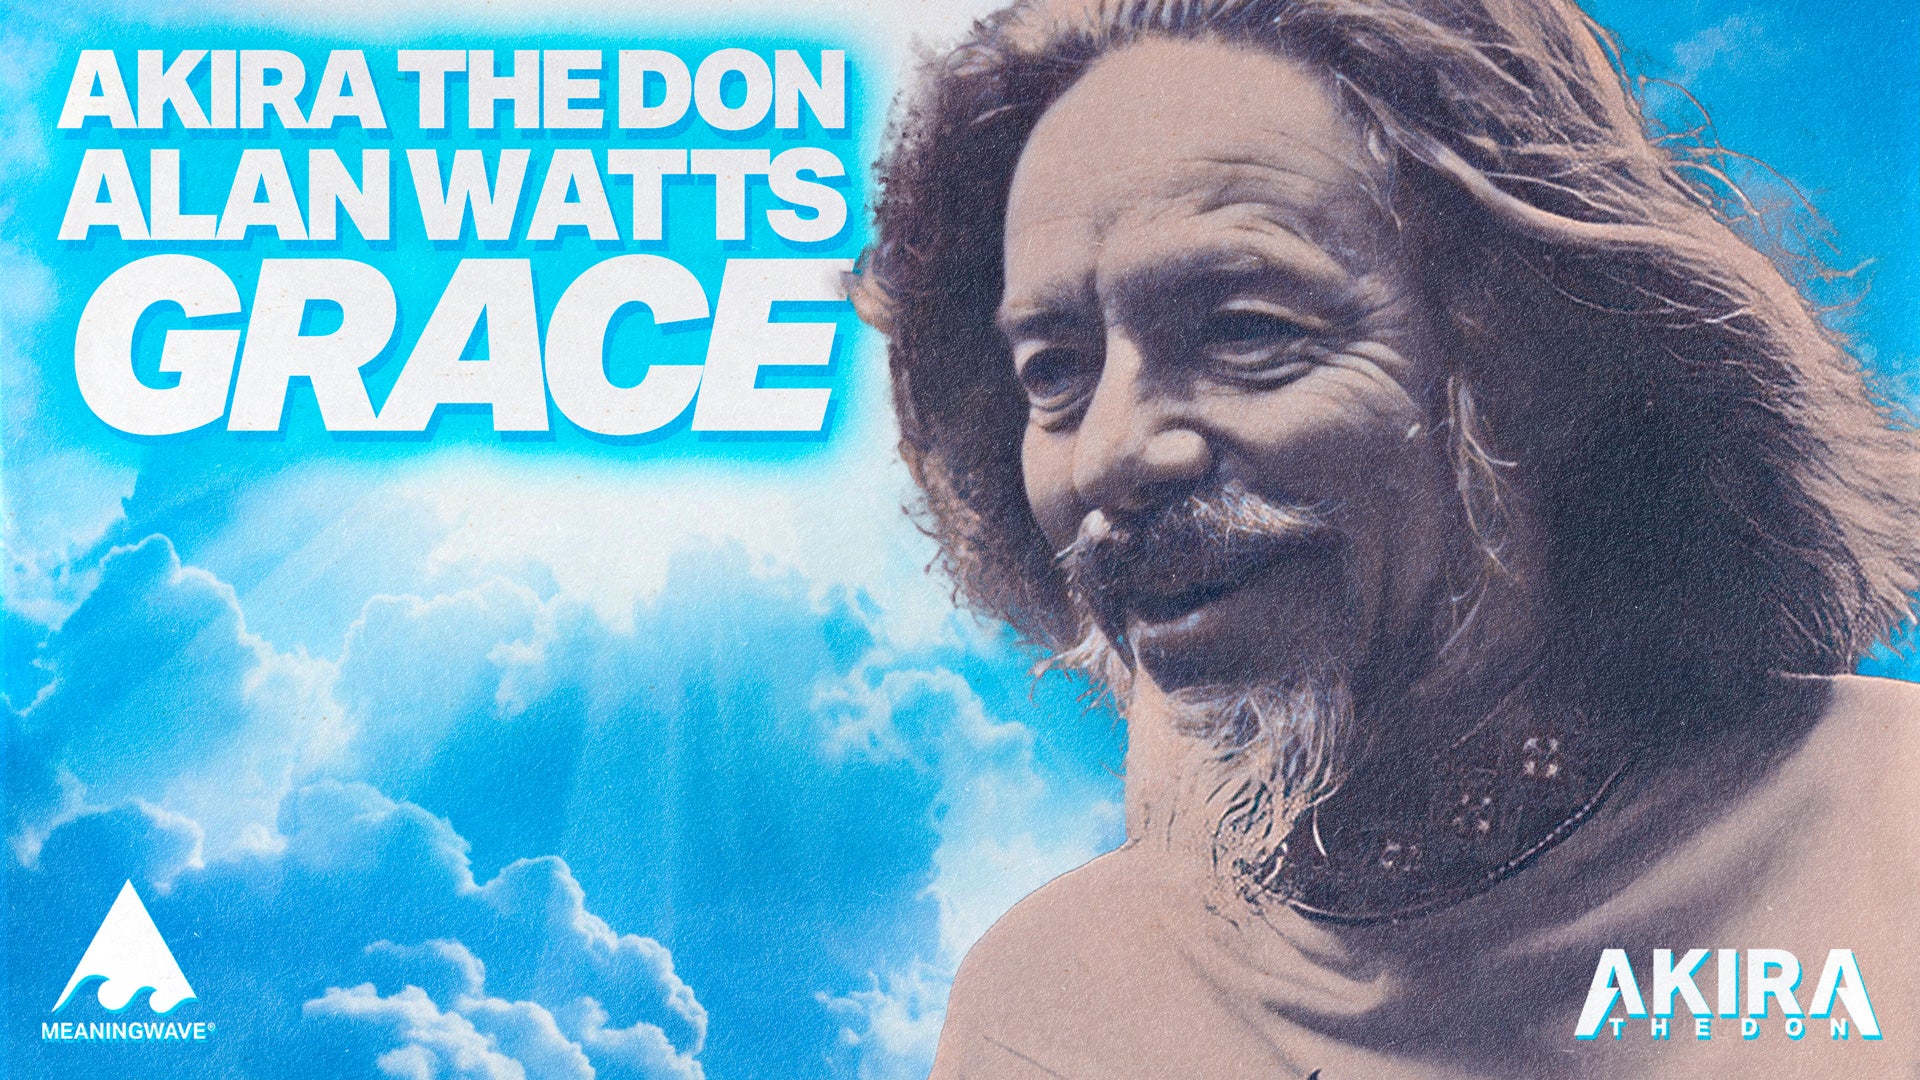 Alan Watts & Akira The Don - GRACE | Music Video | WATTSWAVE | Lofi hip-hop